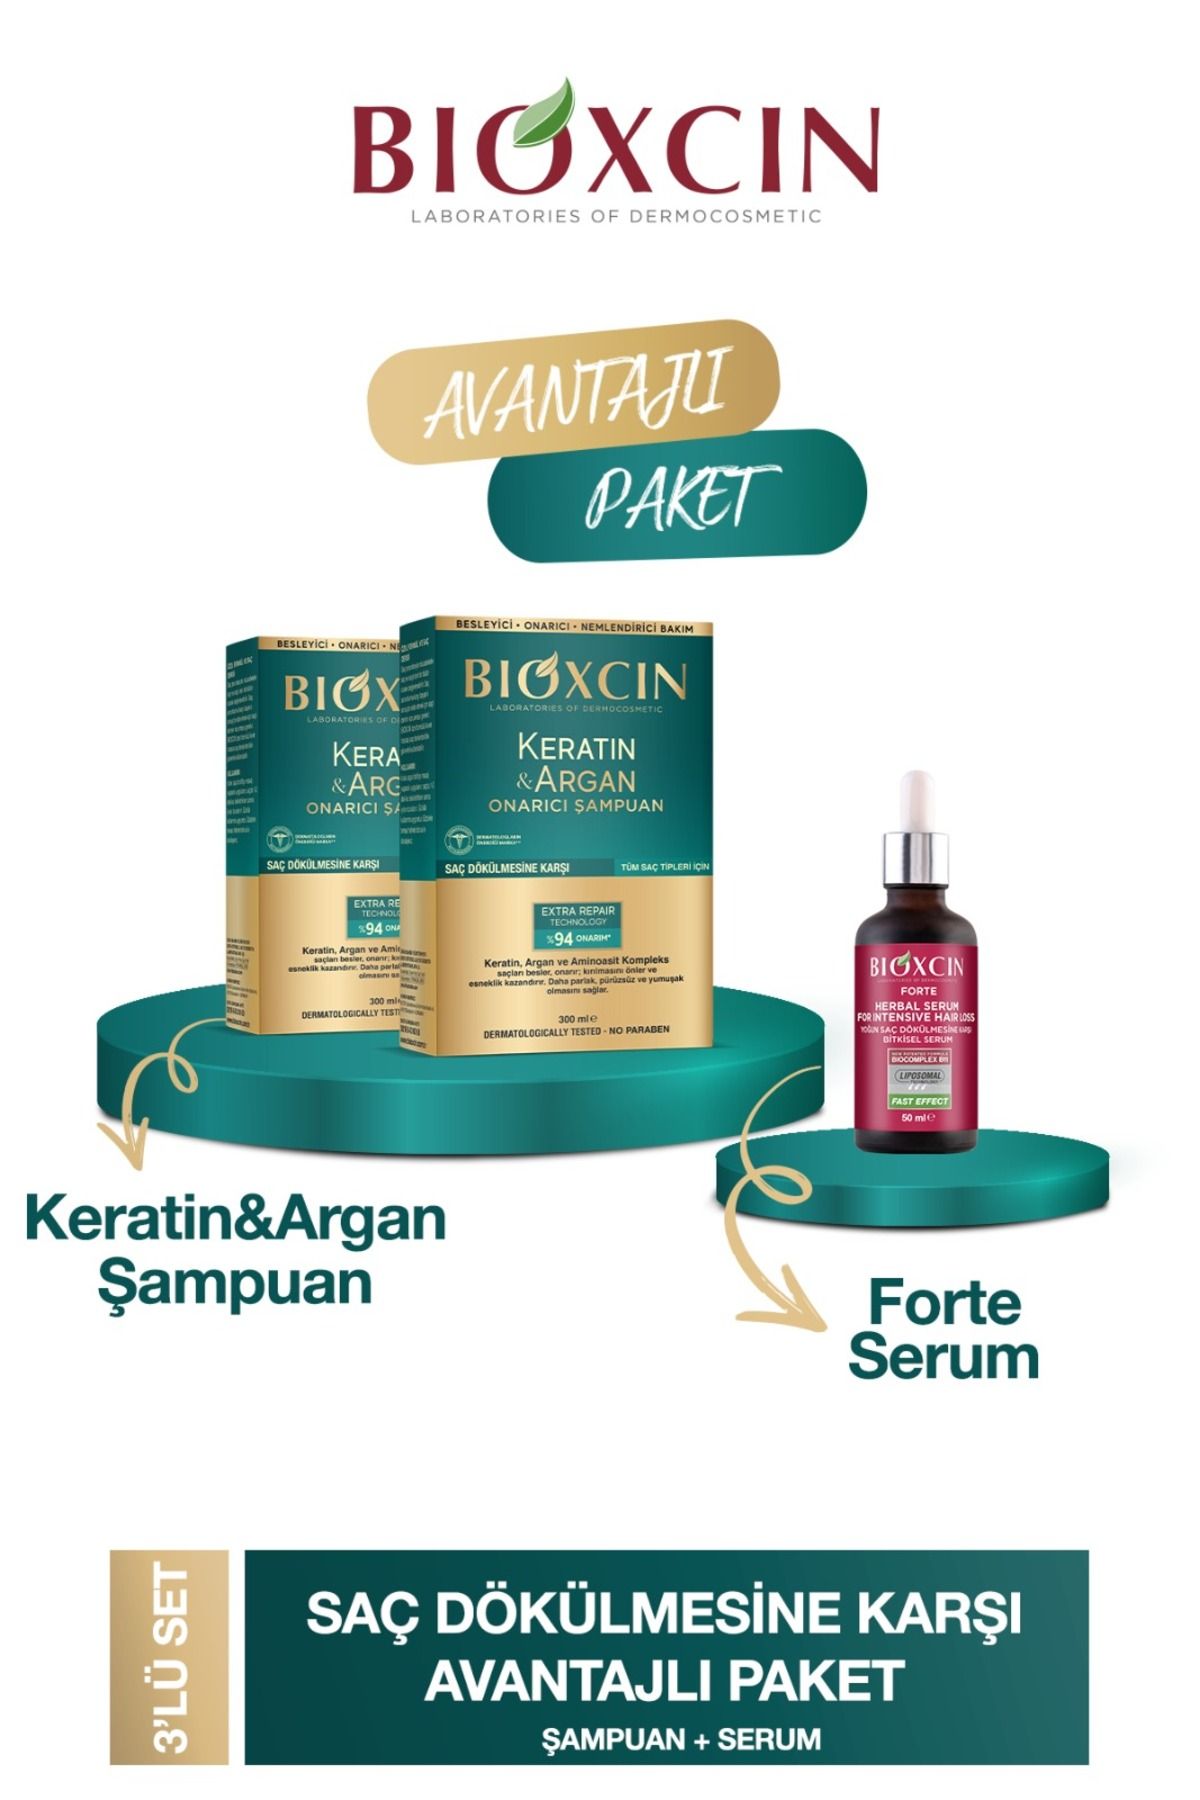 Bioxcin keratin argan şampuanı 300 ml 2 adet + Bioxcin forte serum 50 ml 1 adet